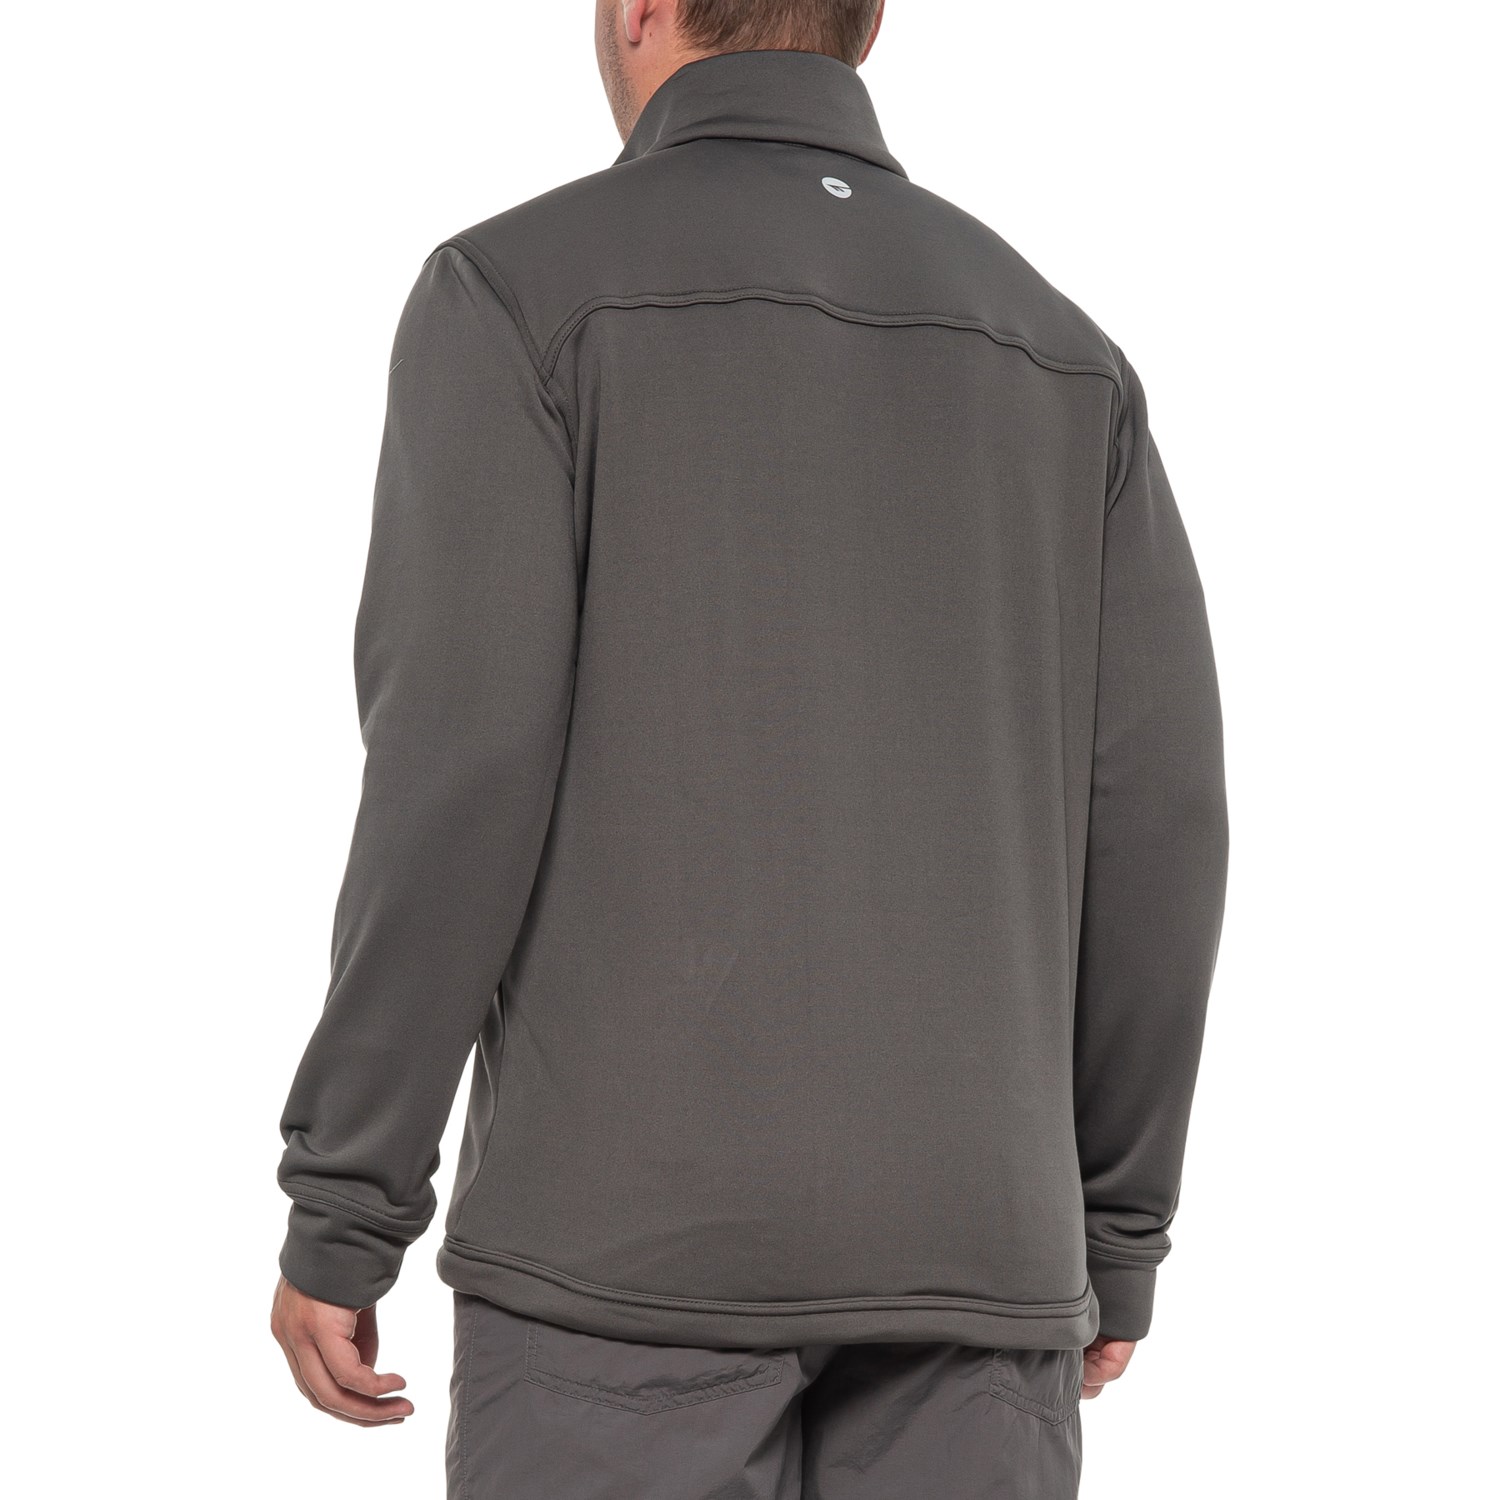 Hi-Tec Phenita Tech Fleece Hybrid Jacket (For Men) - Save 75%